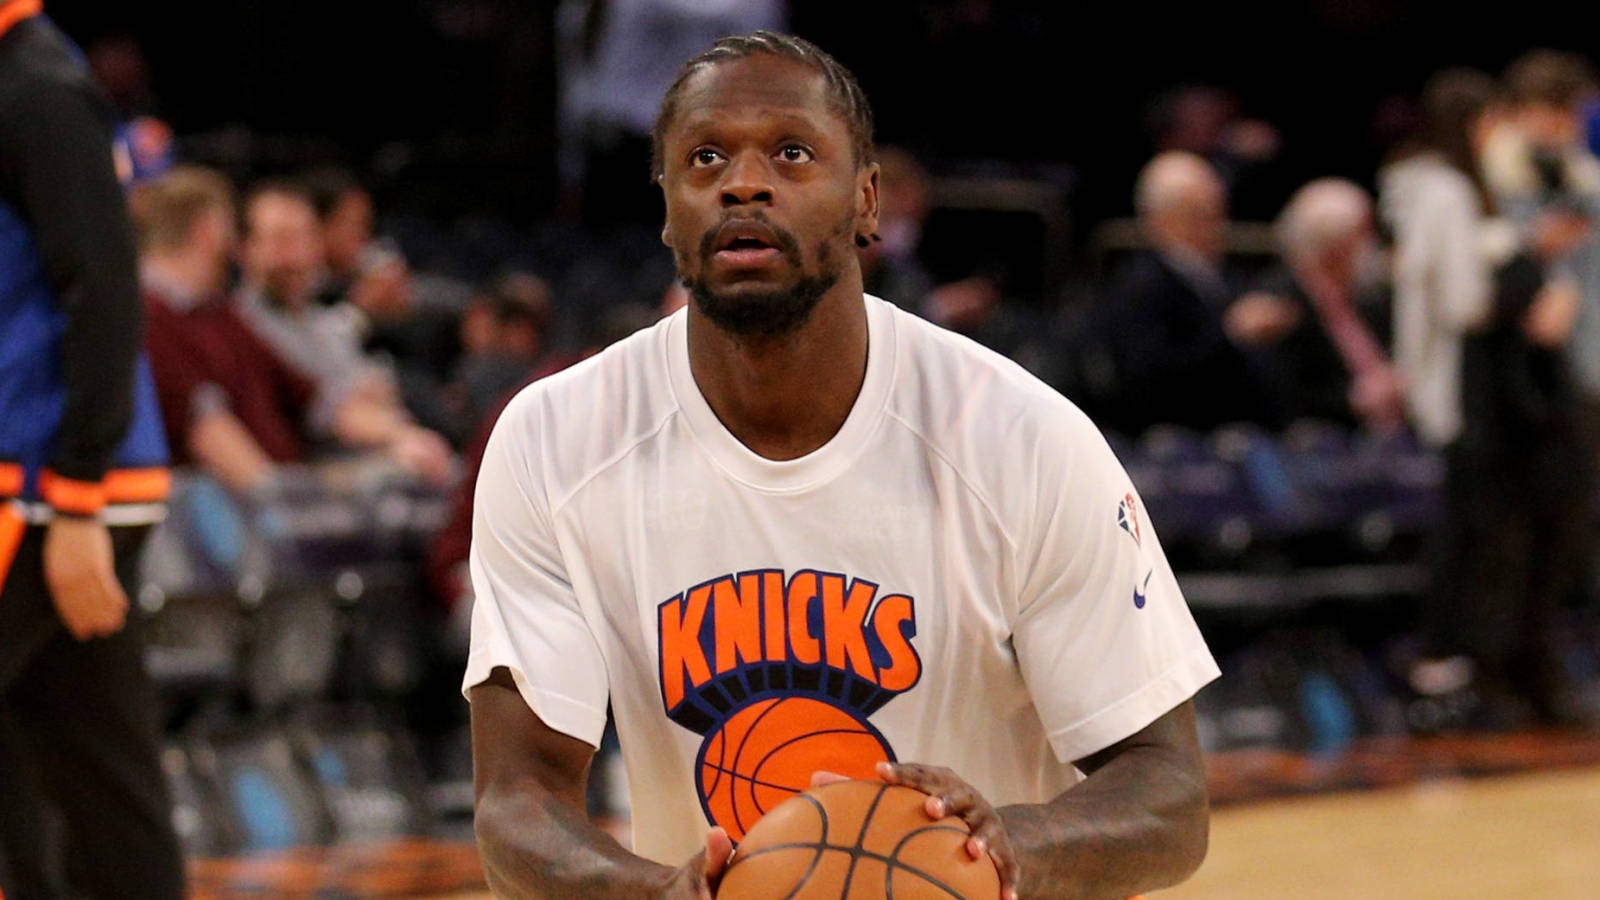 Knicks, Nets each fined $25K by NBA over issues involving Julius Randle, David Vanterpool